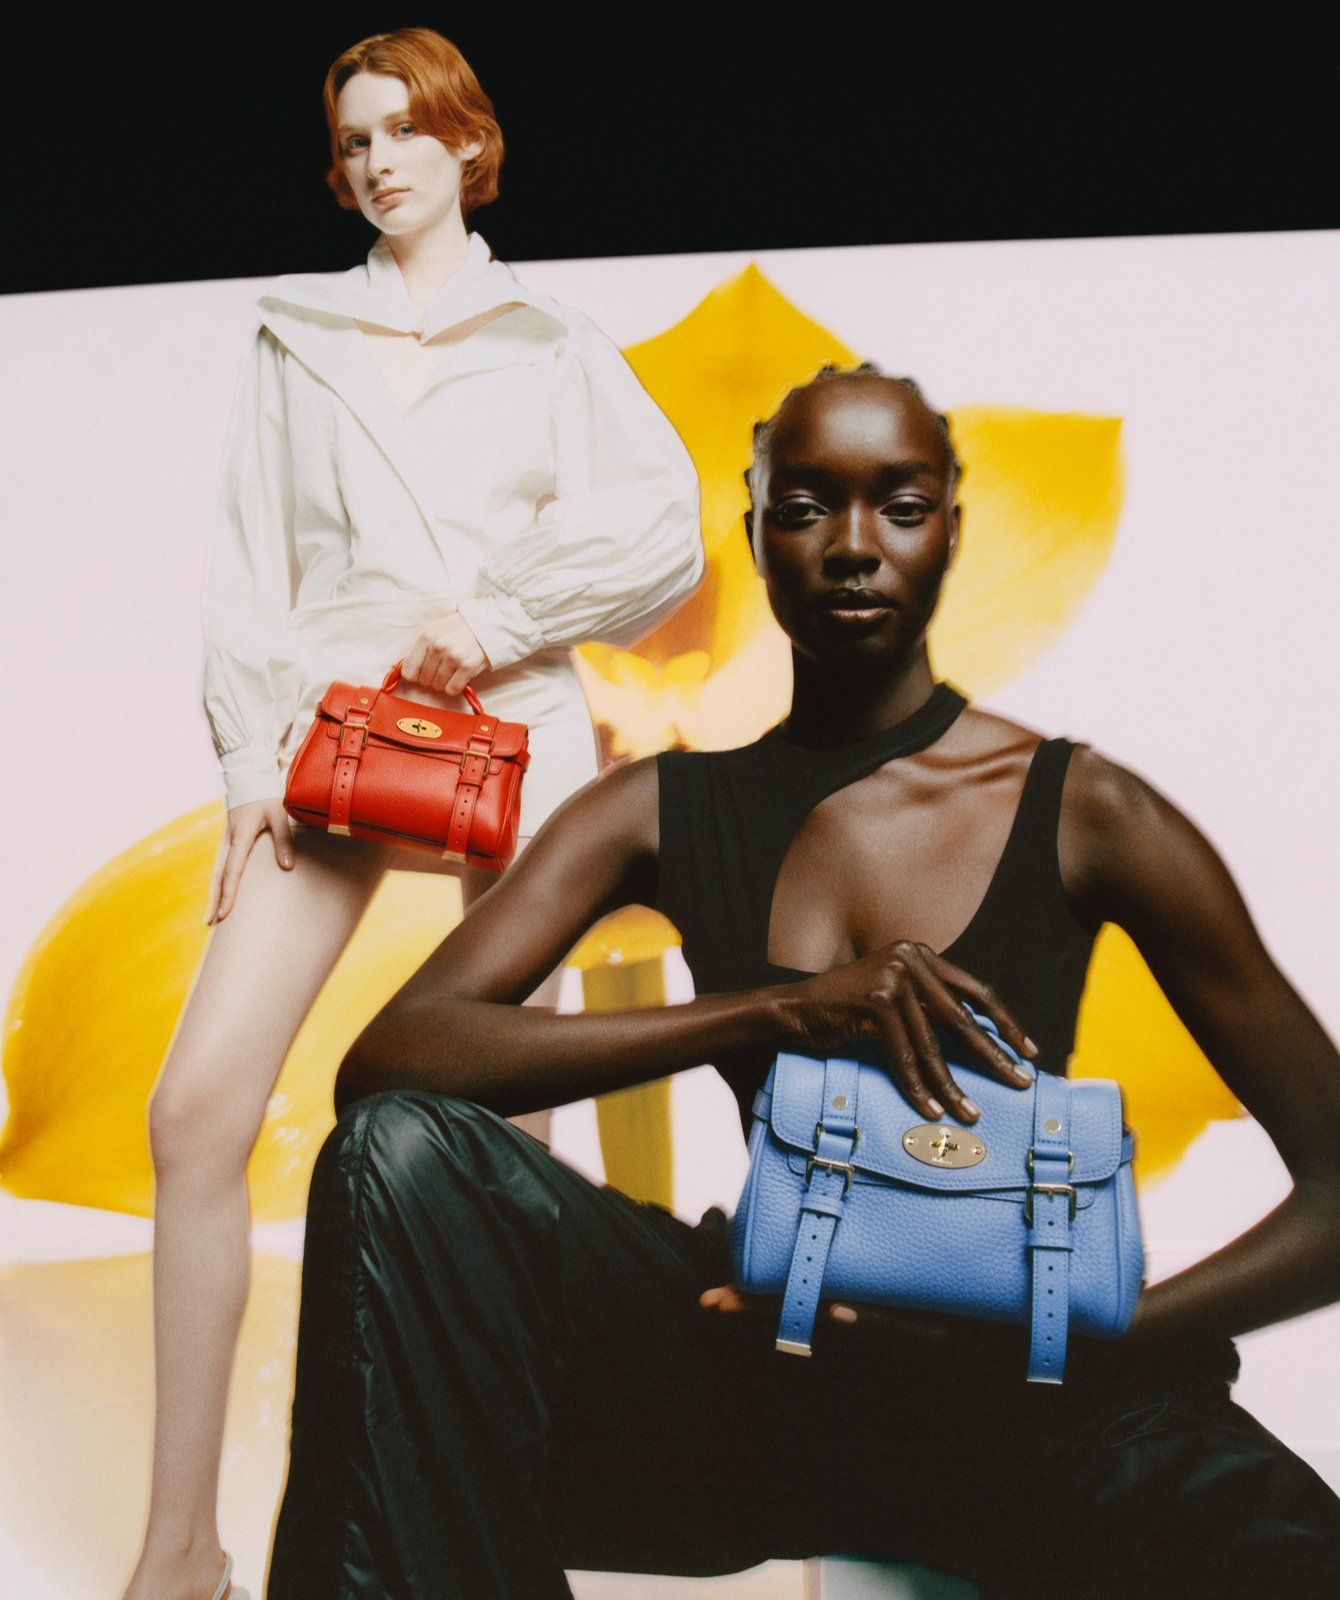 Two models holding the Mini Alexa handbag in Cornflower Blue and Coral Orange